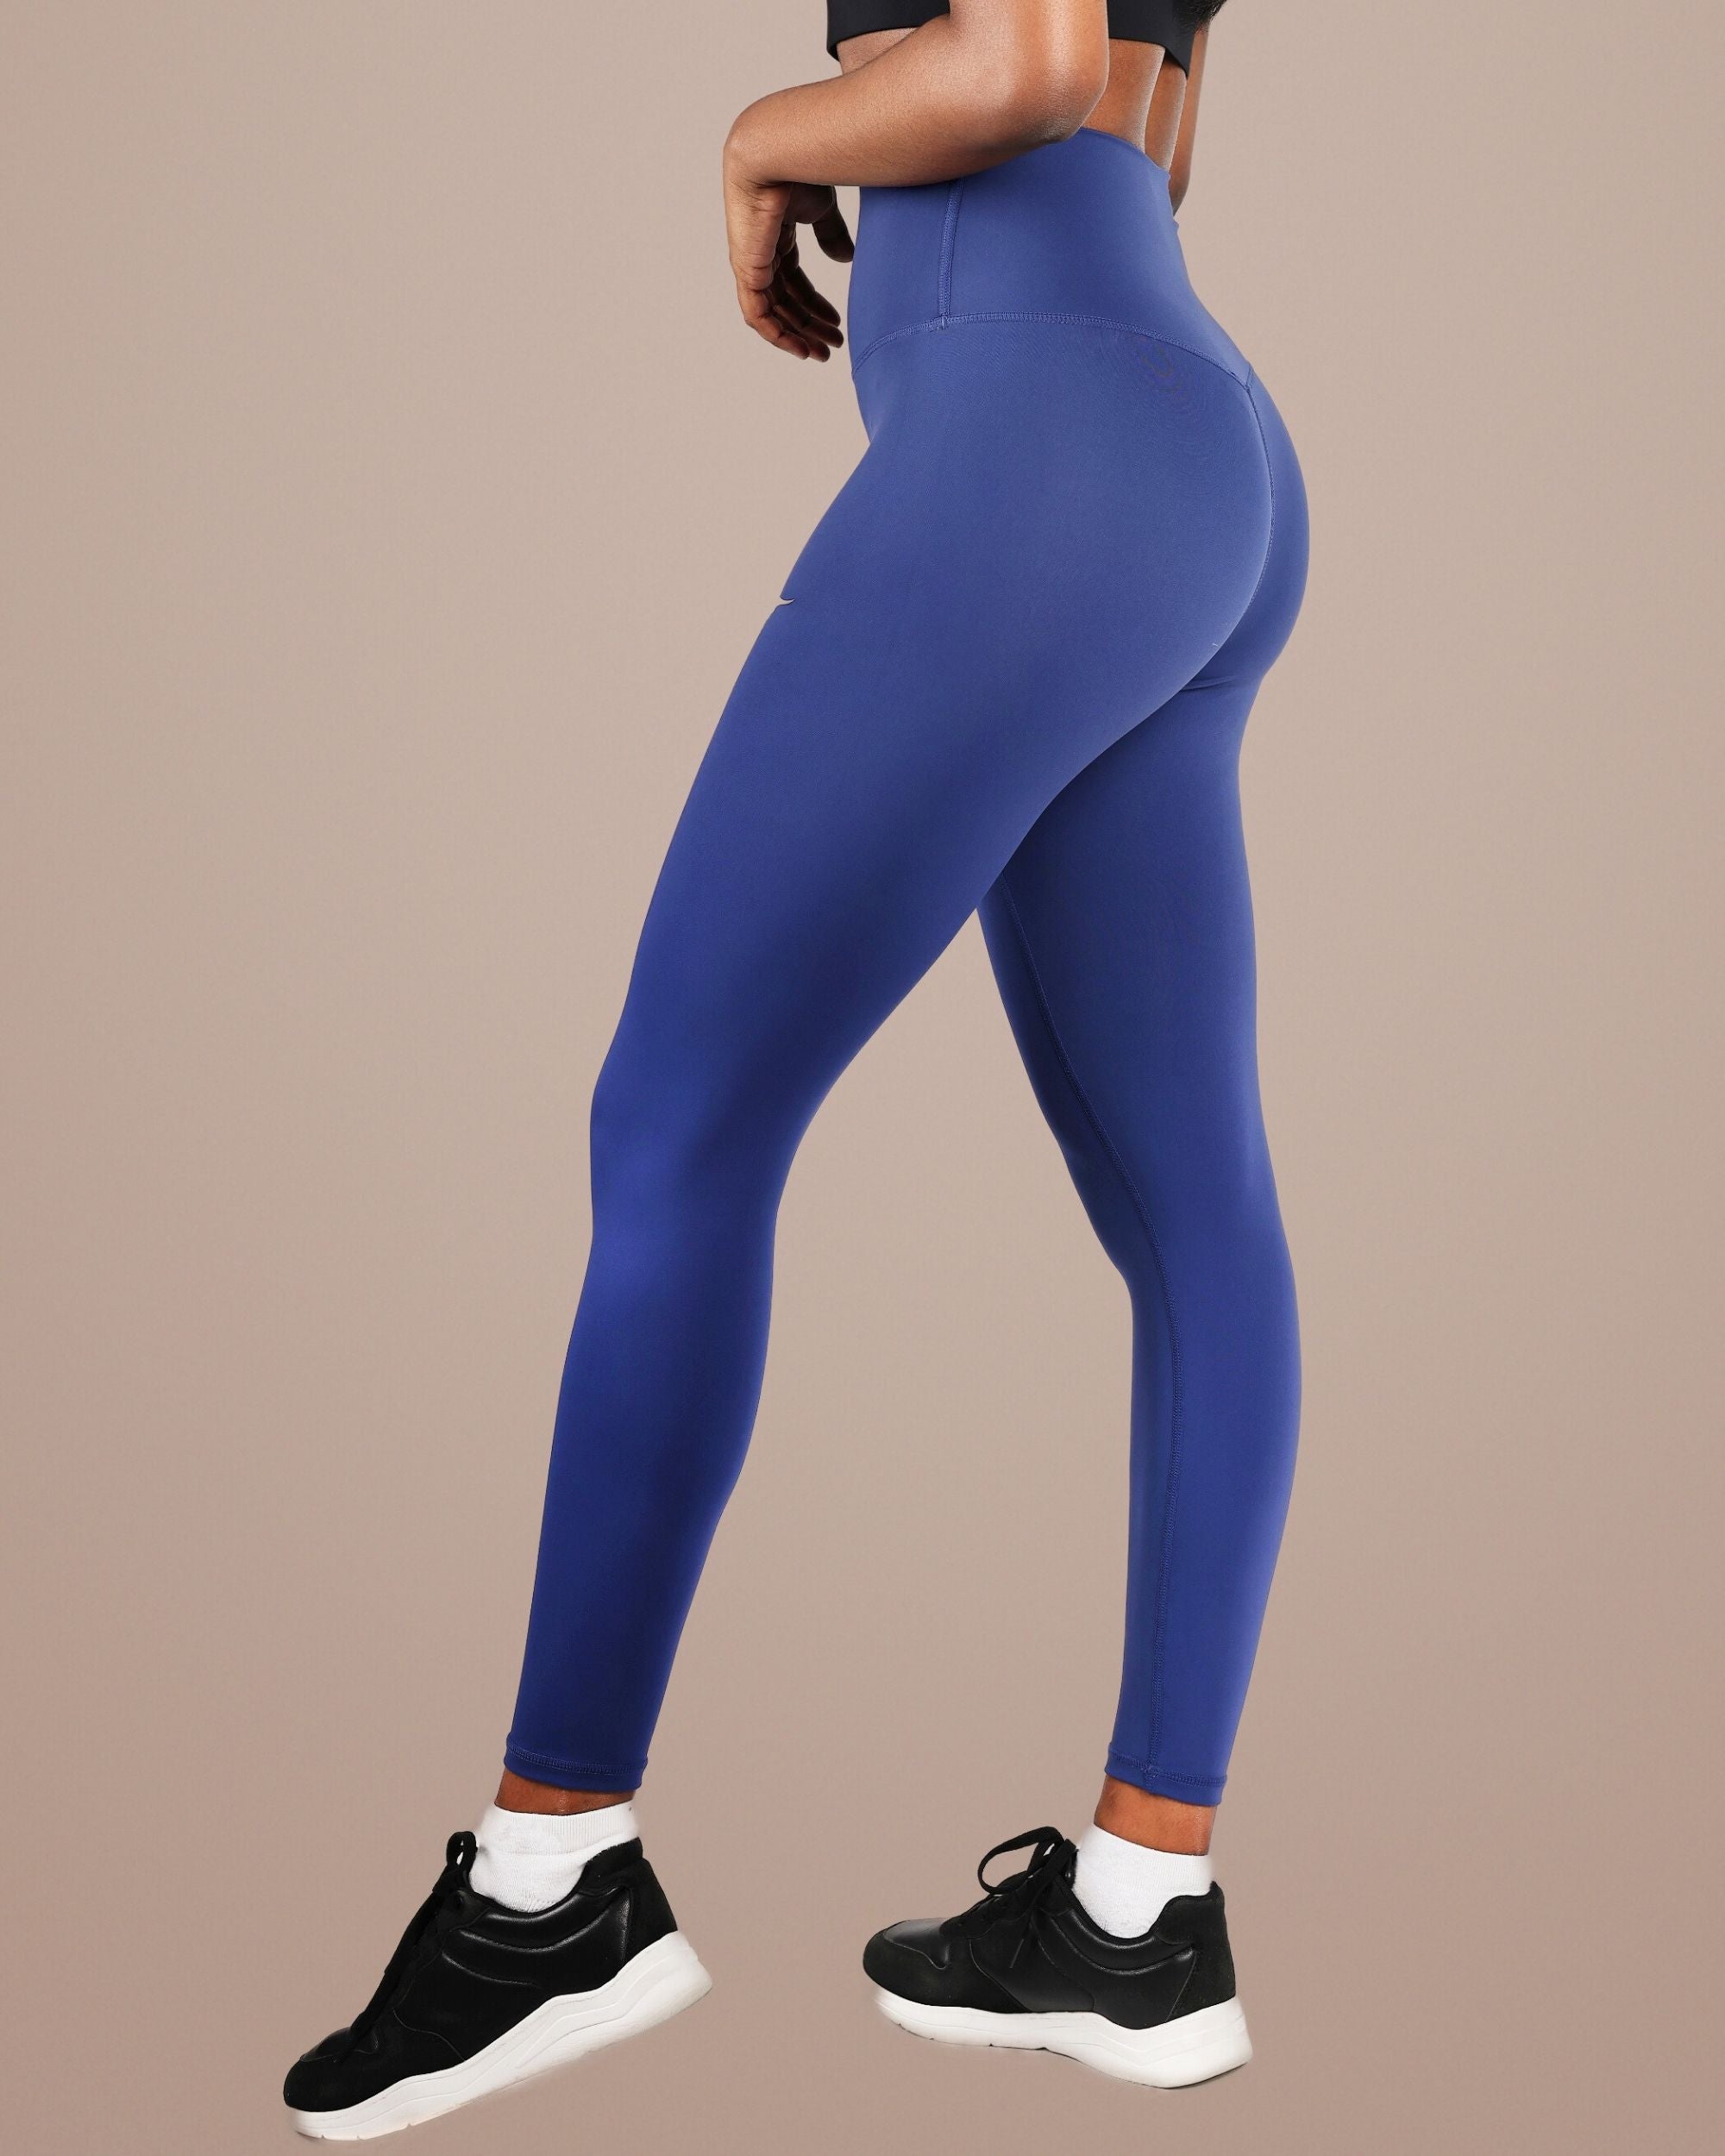 THUGFIT FlexFit Pro High-performance leggings - Blue - THUGFIT